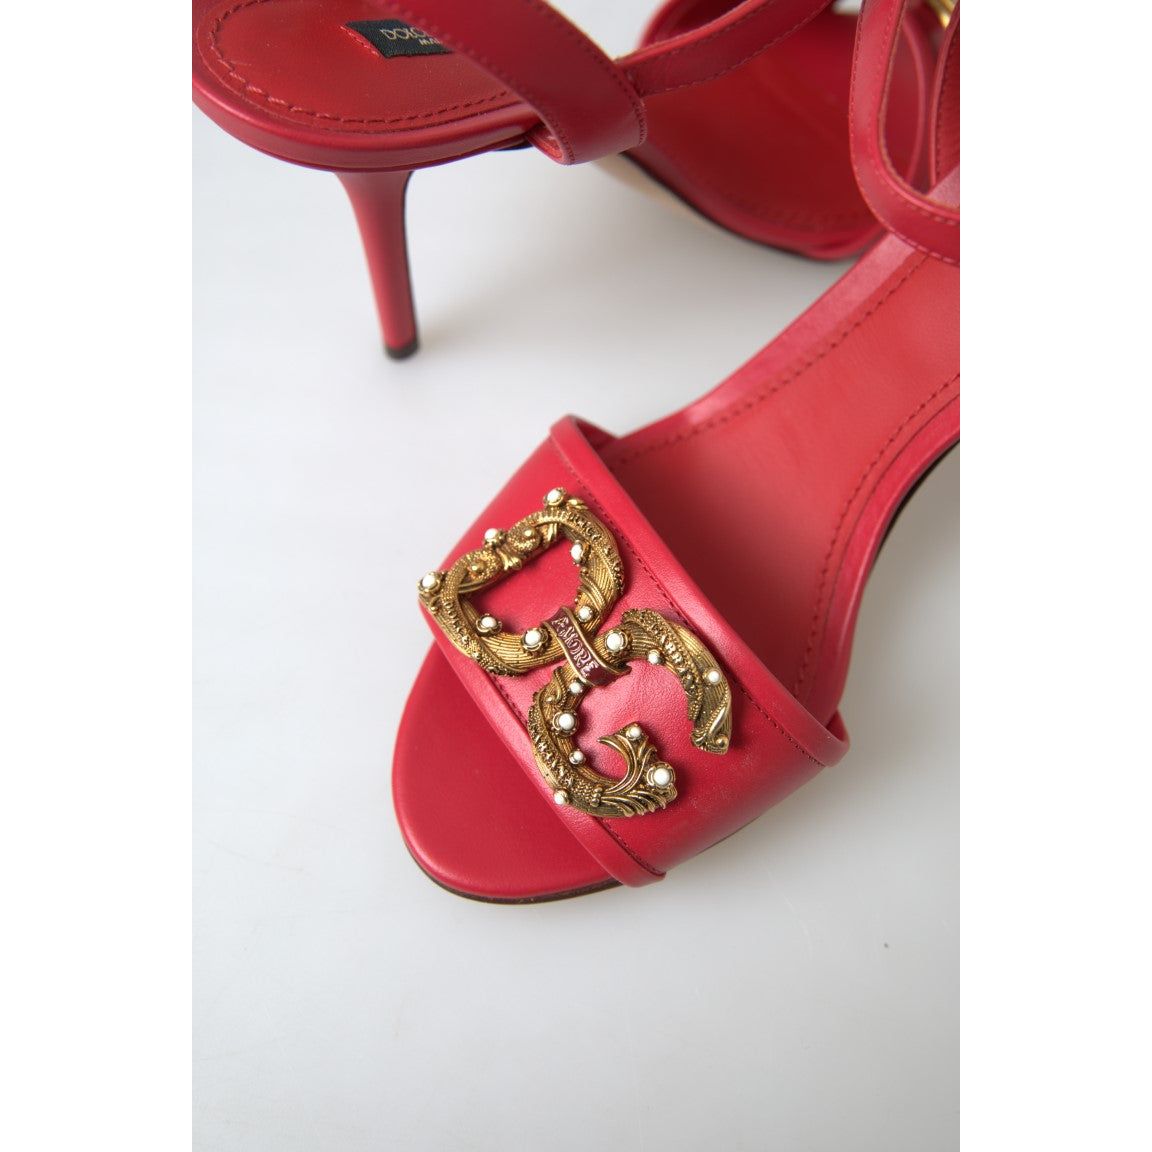 Dolce & Gabbana Red Stiletto Sandal Heels red-ankle-strap-stiletto-heels-sandals-shoes 465A9957-Medium-1ebbebff-9d3.jpg